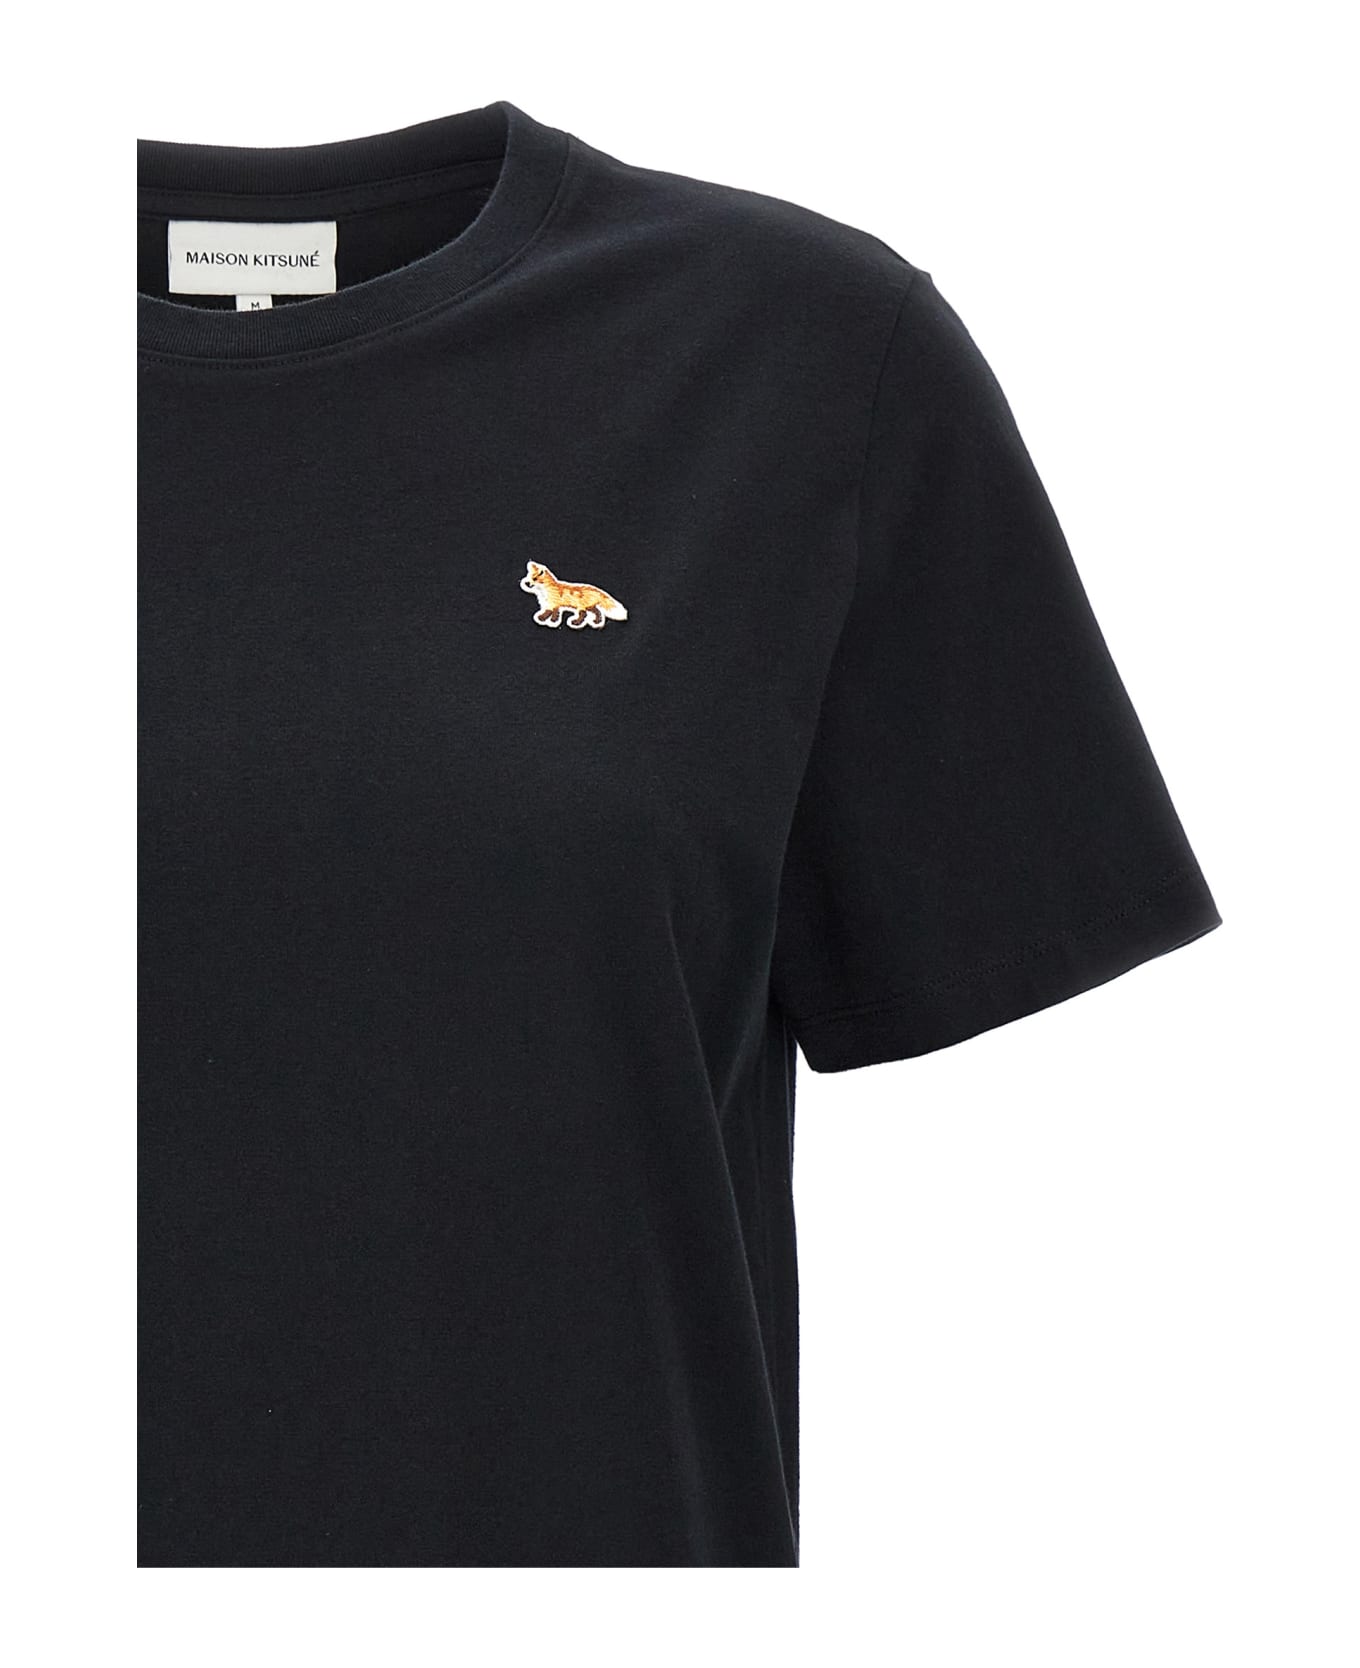 Maison Kitsuné 'baby Fox' T-shirt - Black  